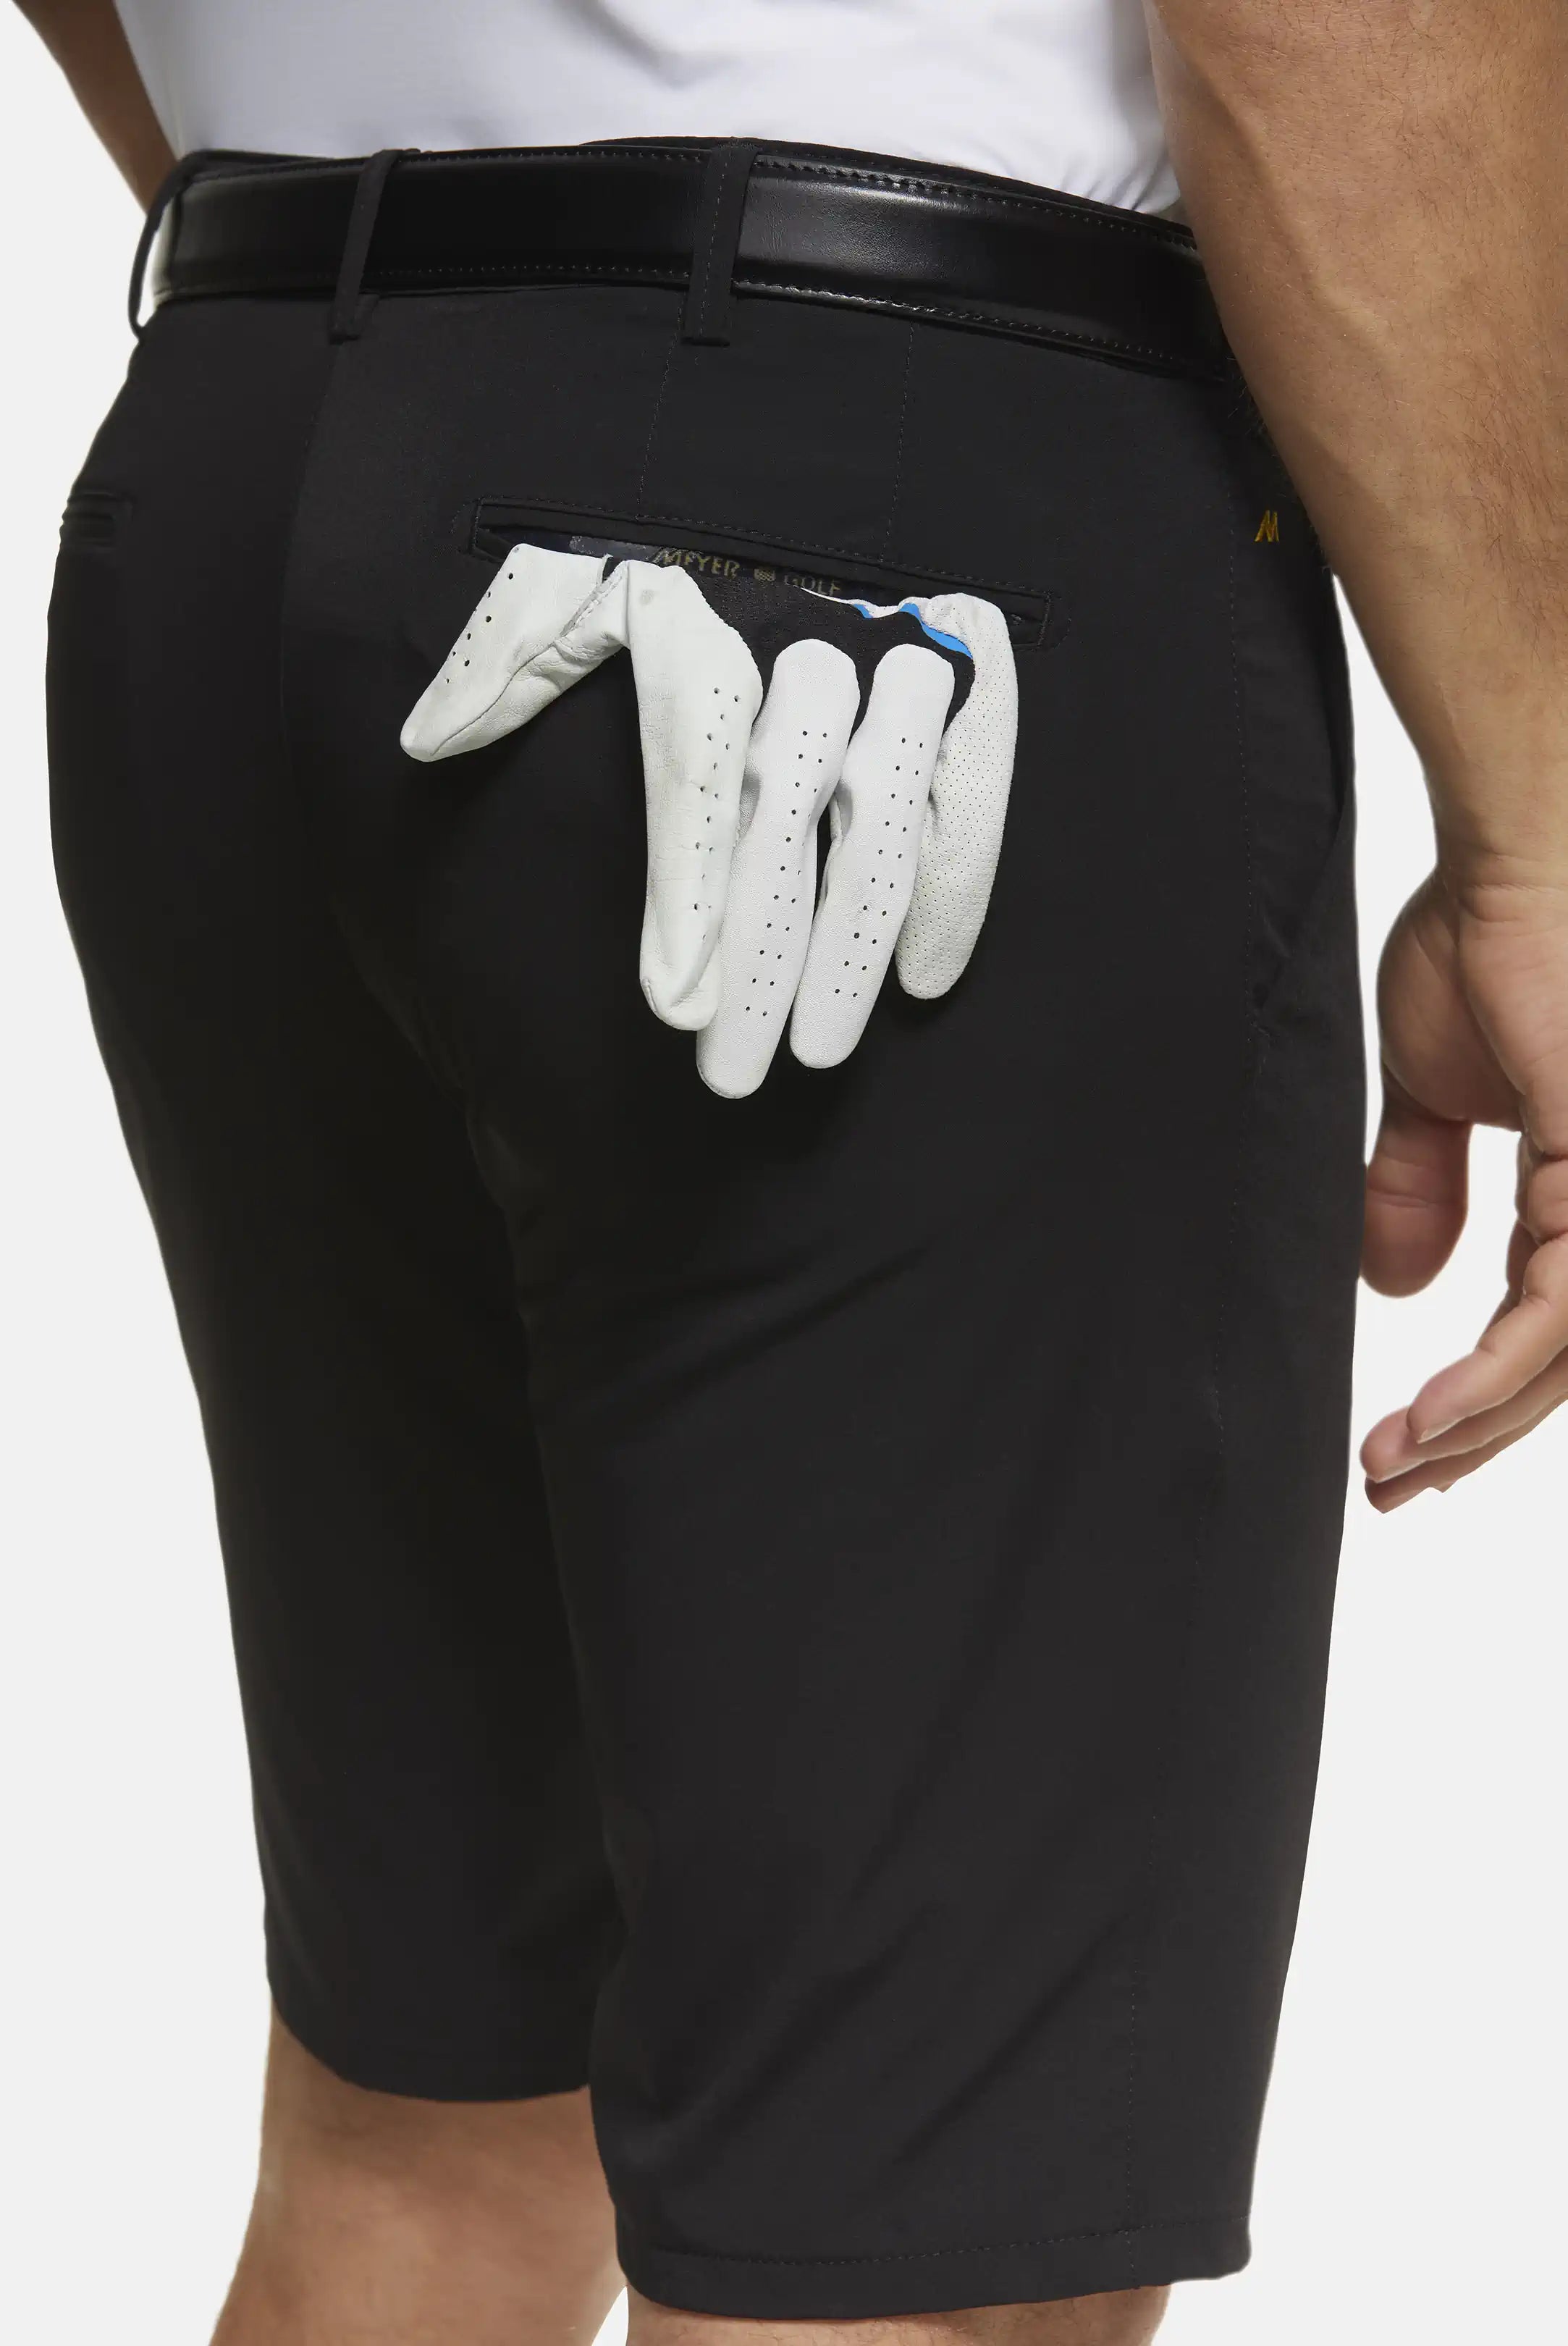 MEYER Golf Shorts - St. Andrews 8070 High Performance Cotton - Black